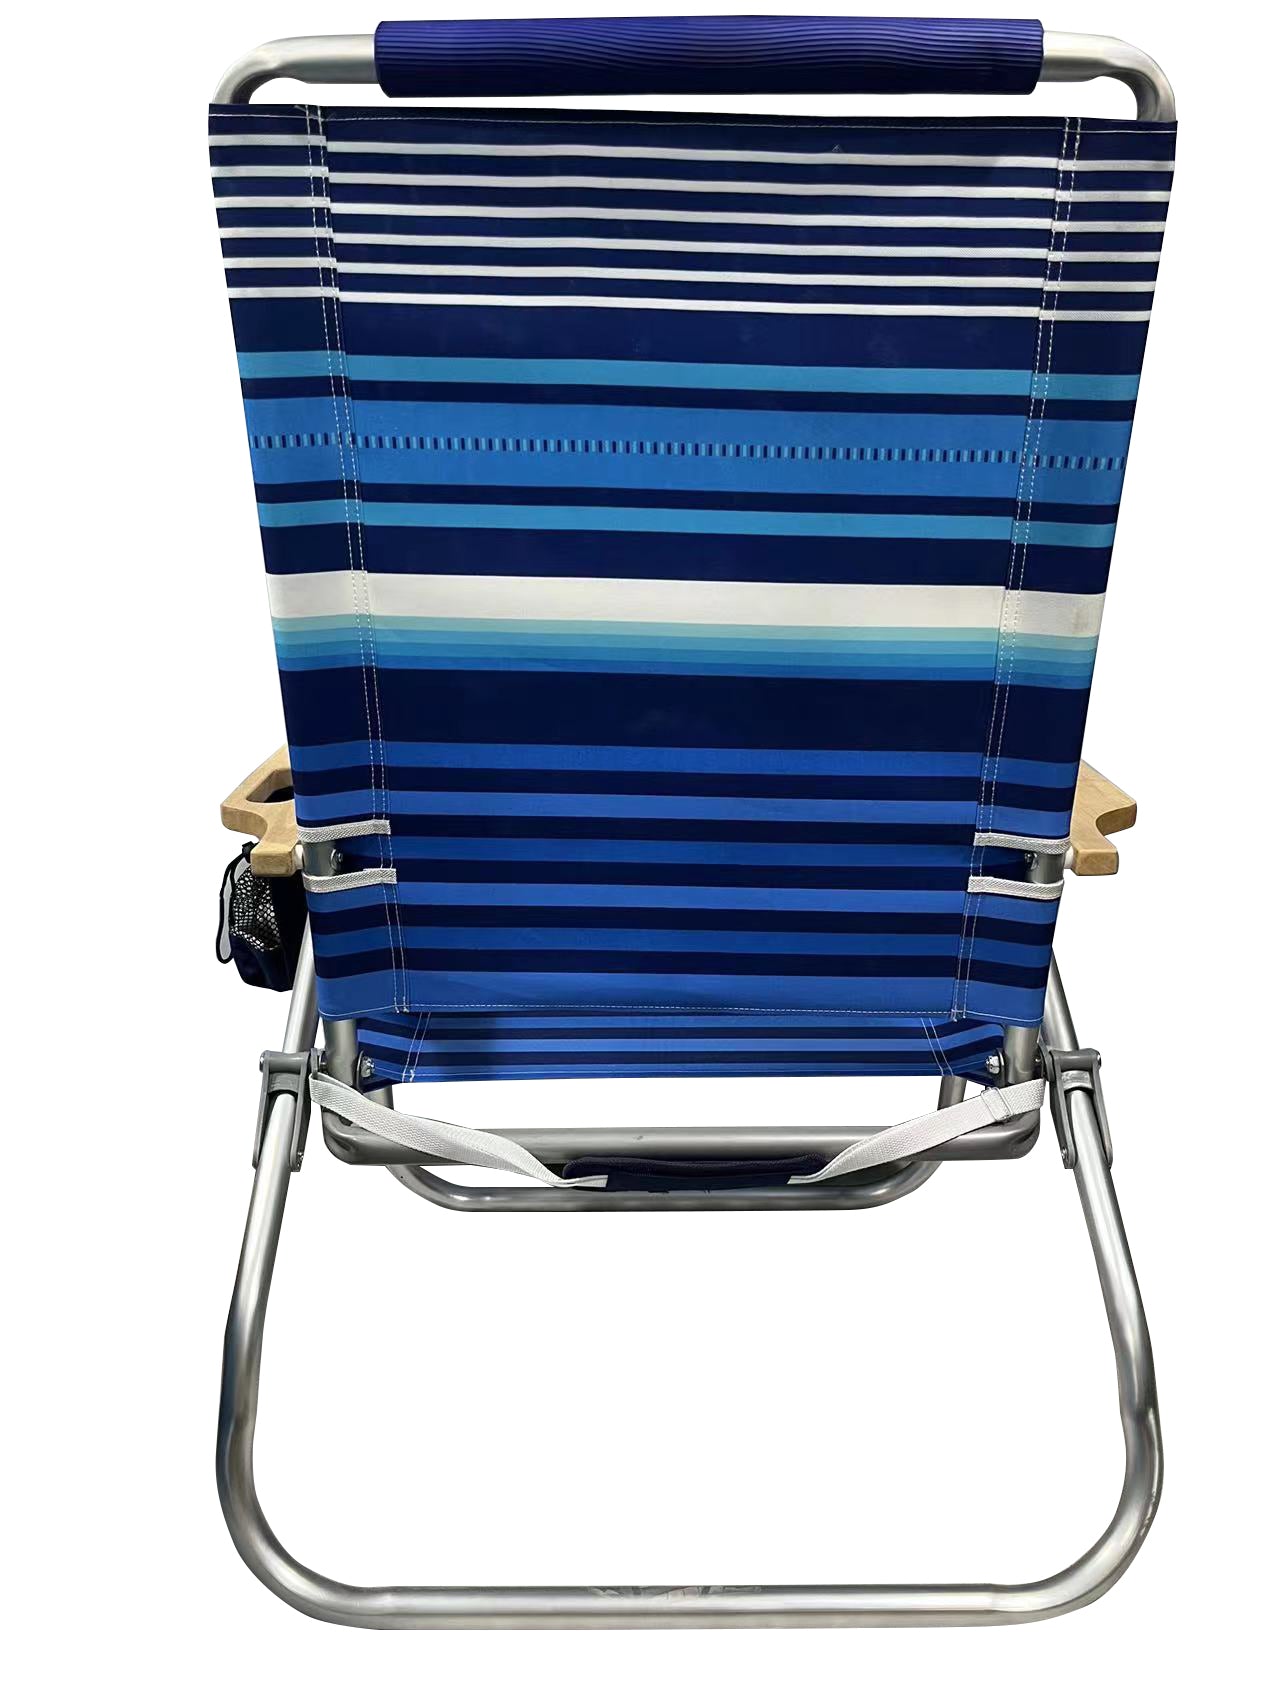 Beach Bum Aluminium Chair - Navy & Blue Stripe - NEARLY GONE